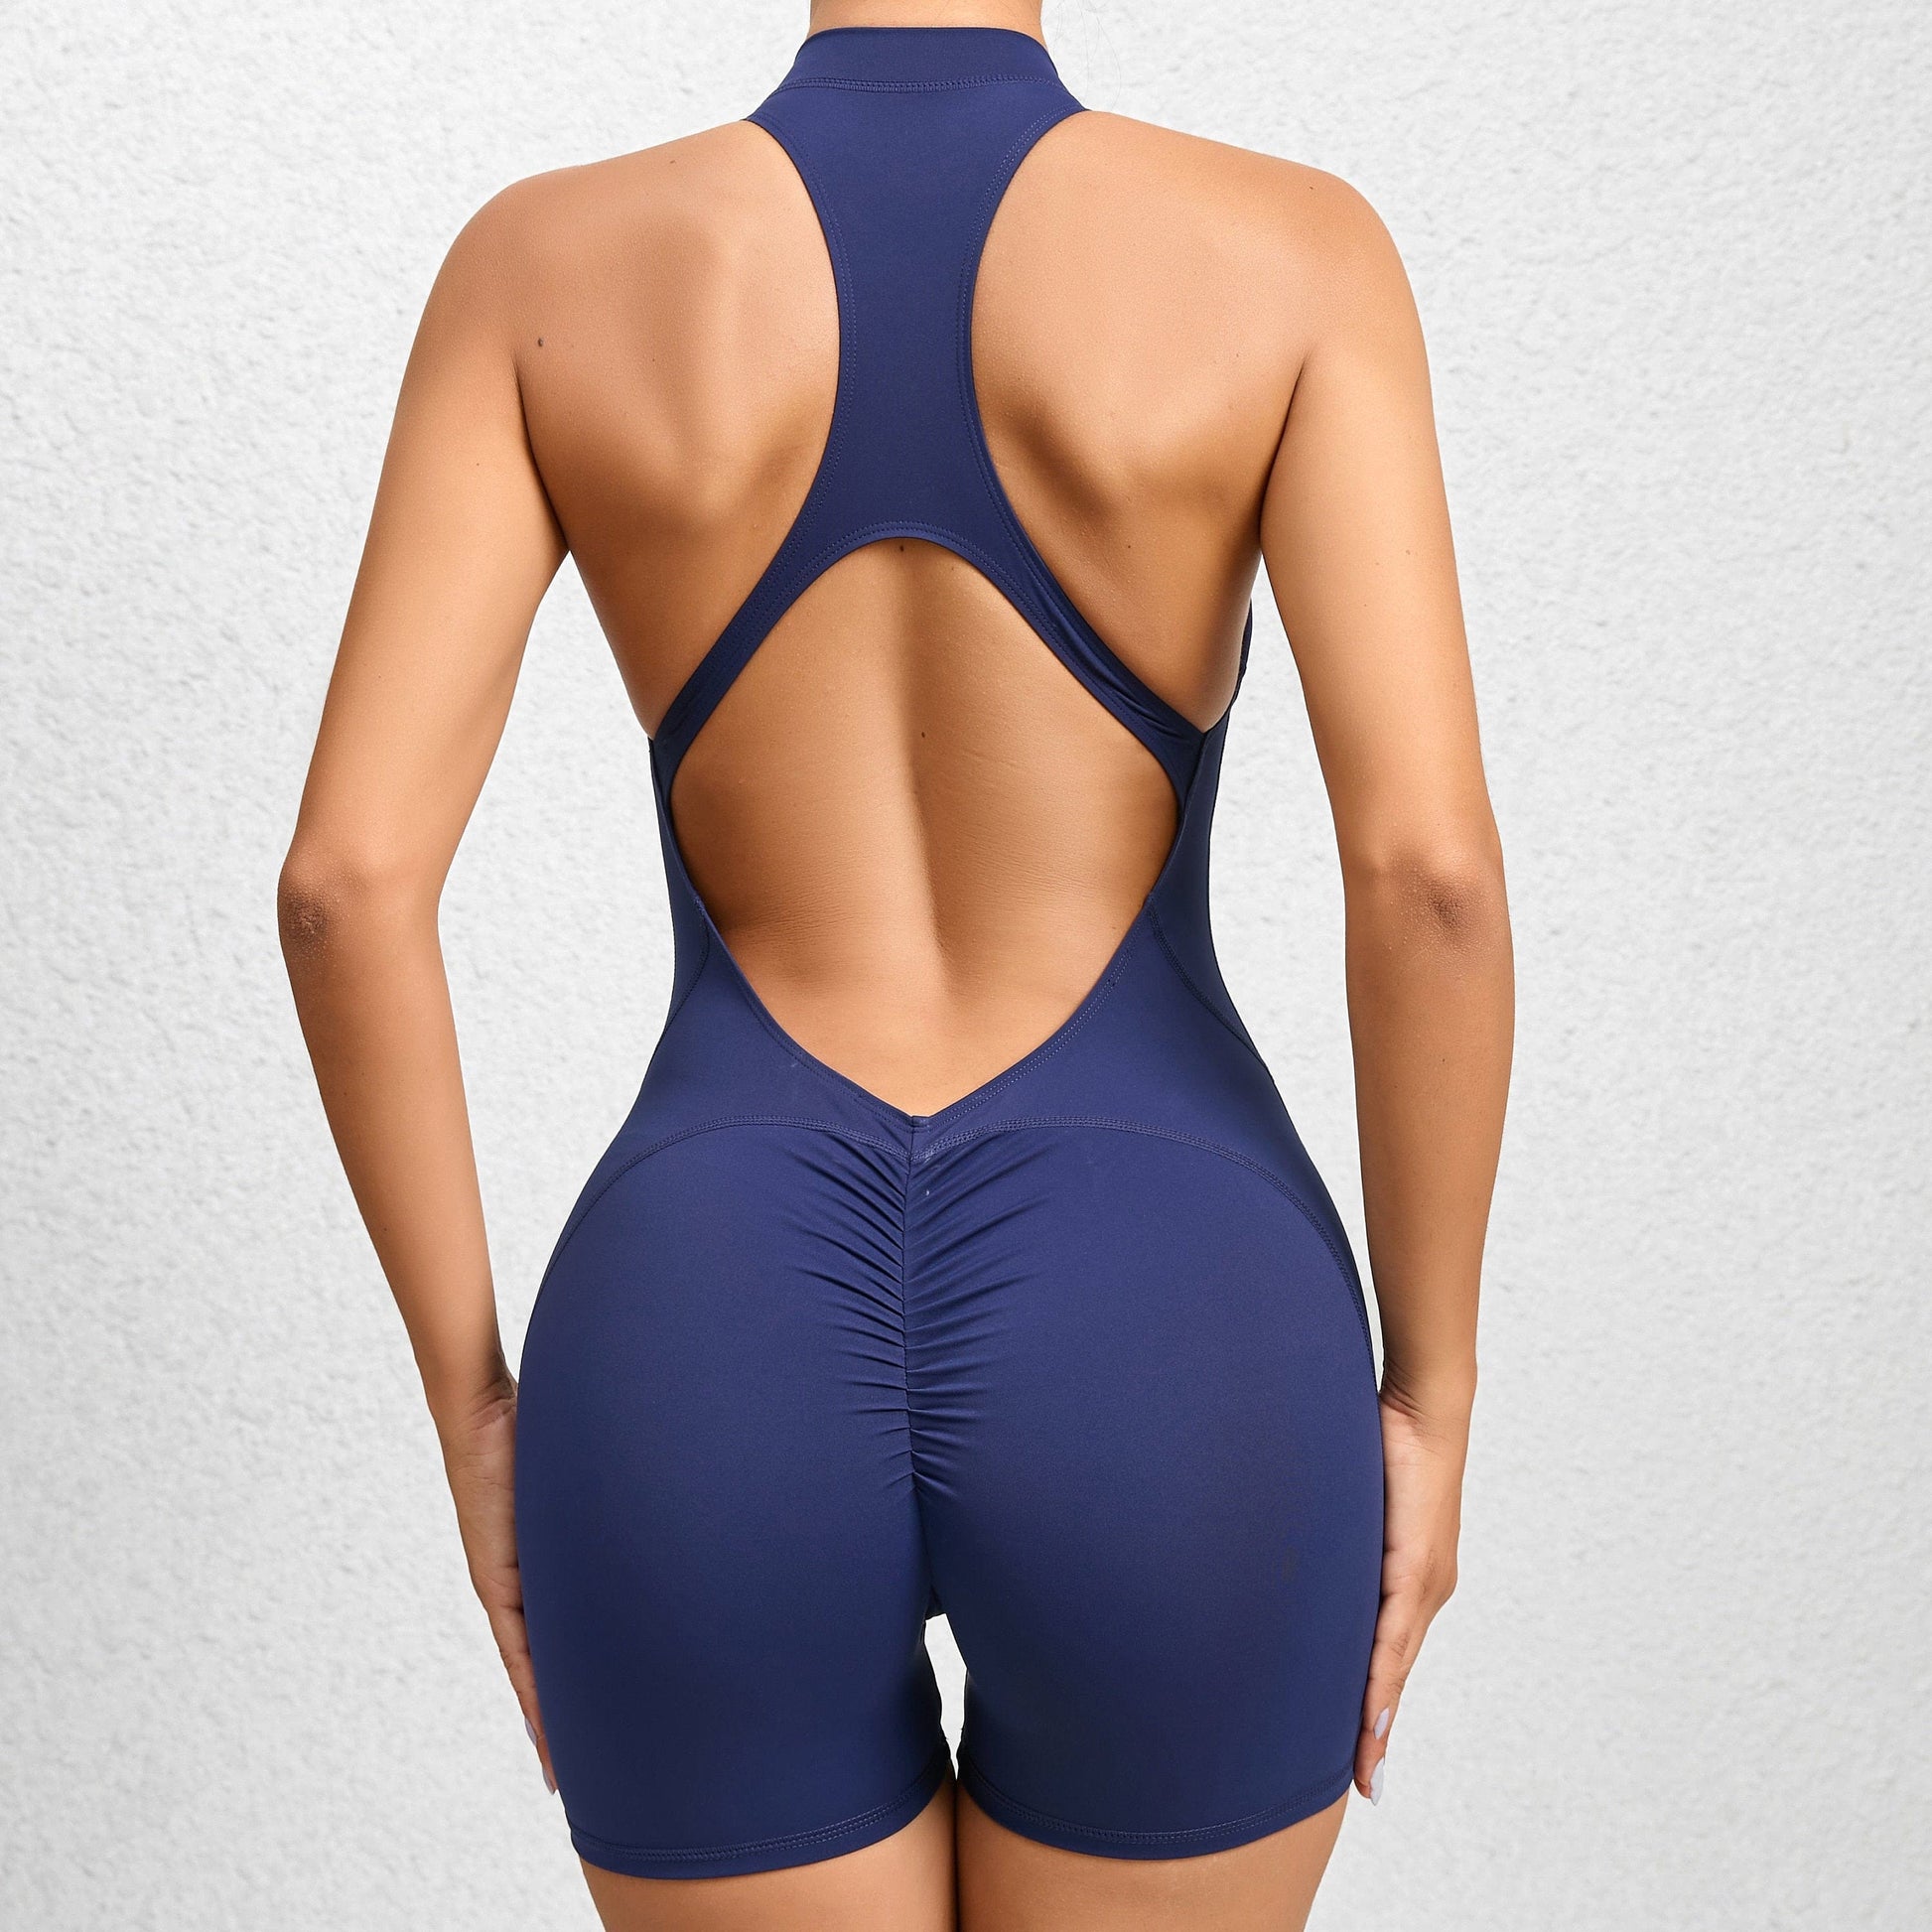 Seamless Women Yoga Backless Jumpsuit Workout Bodysuit Sleeveless Gym Bodycon Sportswear Fitness Yoga Suit One Piece Outfit Amazon